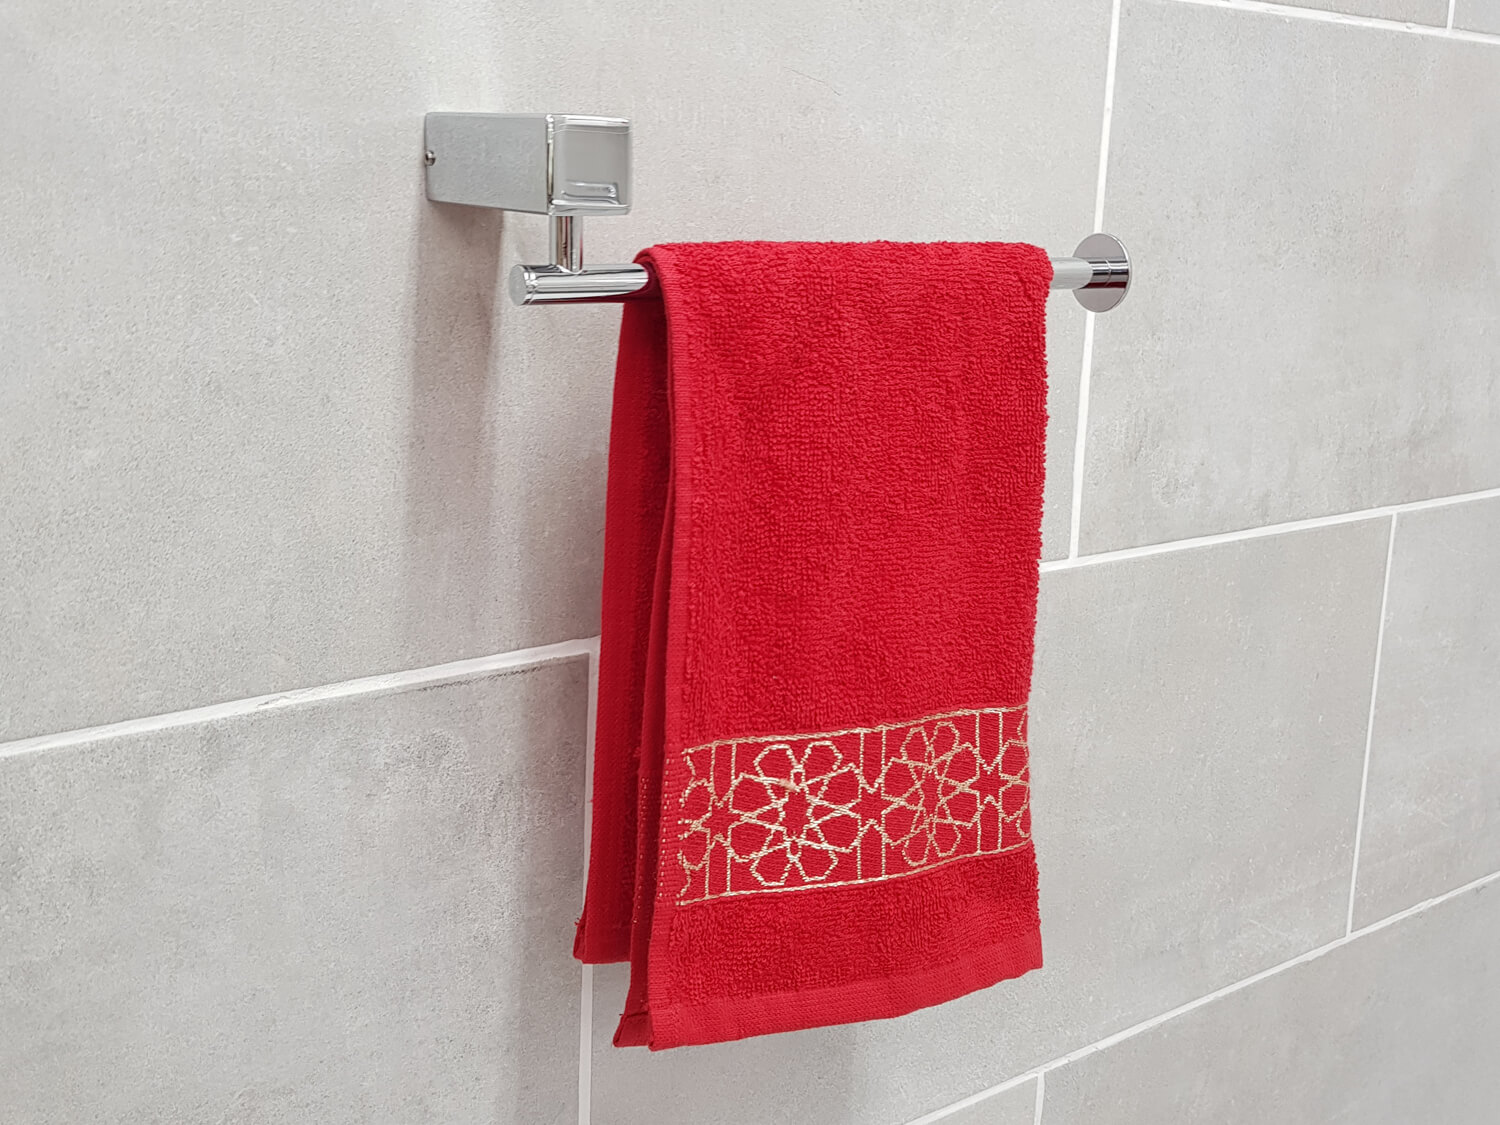 COTTO Square Chrome Single Towel Bar